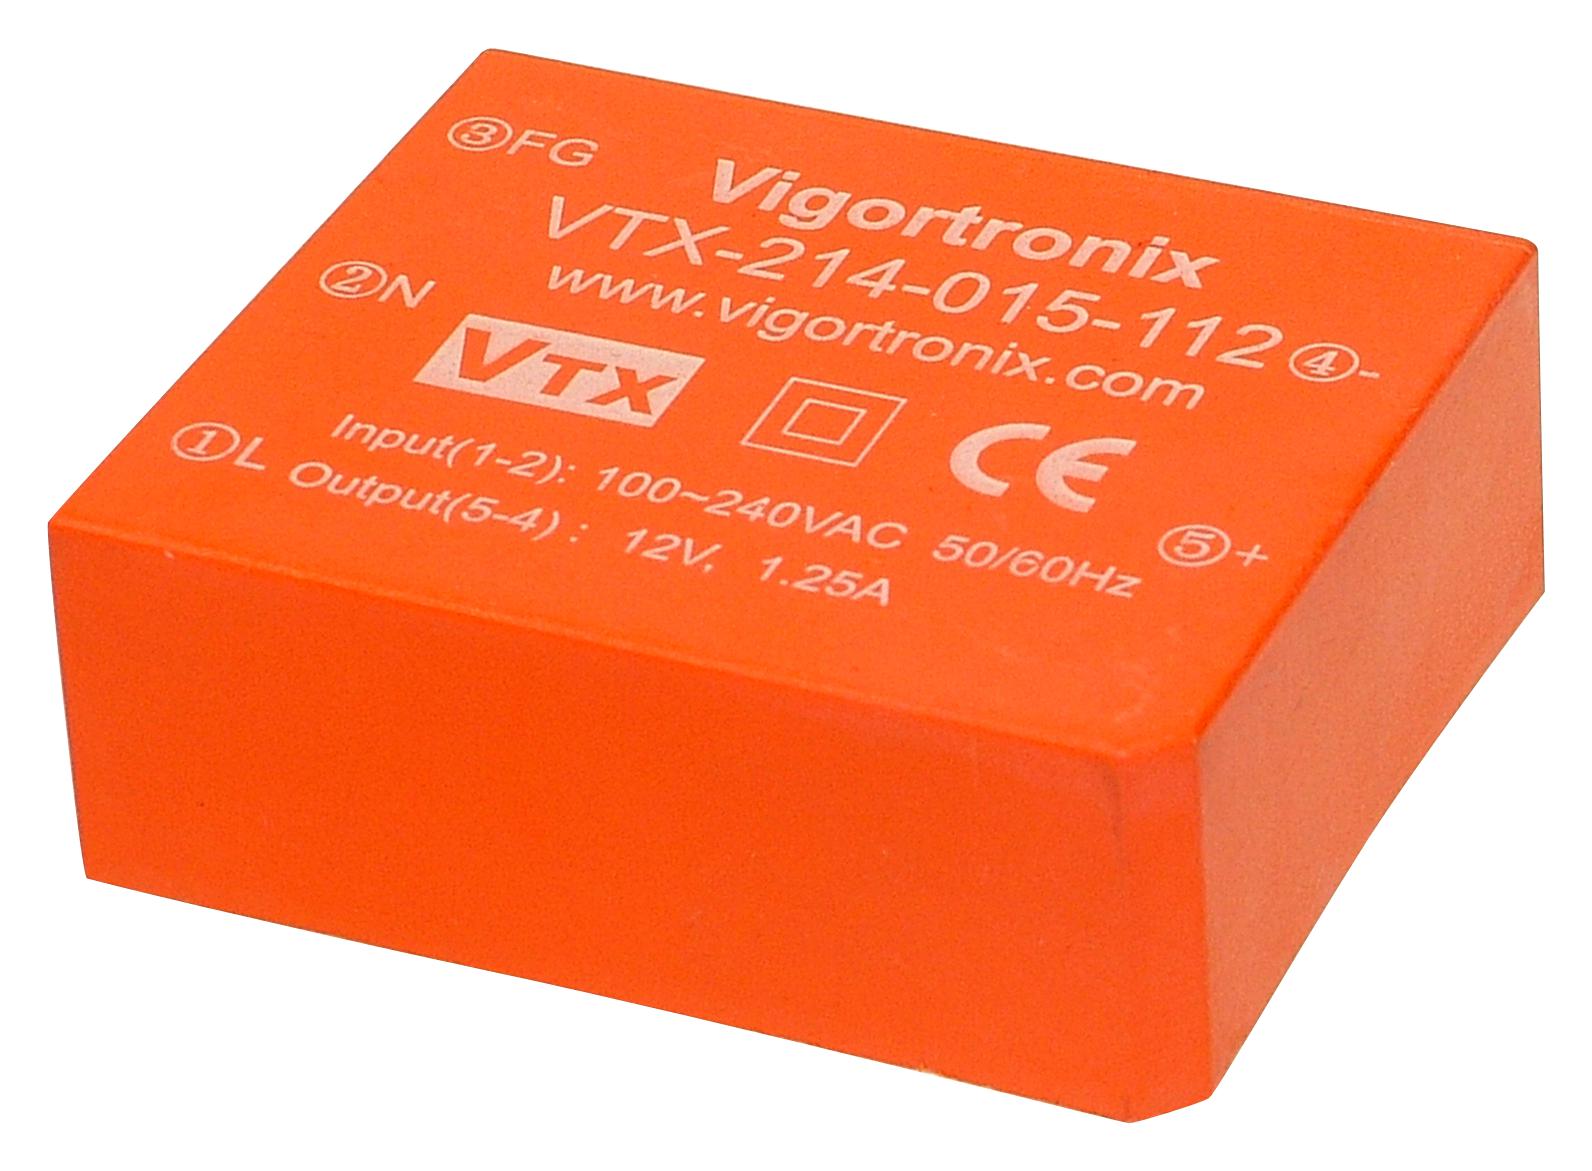 VTX-214-015-112 POWER SUPPLY, AC-DC, 12V, 1.25A VIGORTRONIX